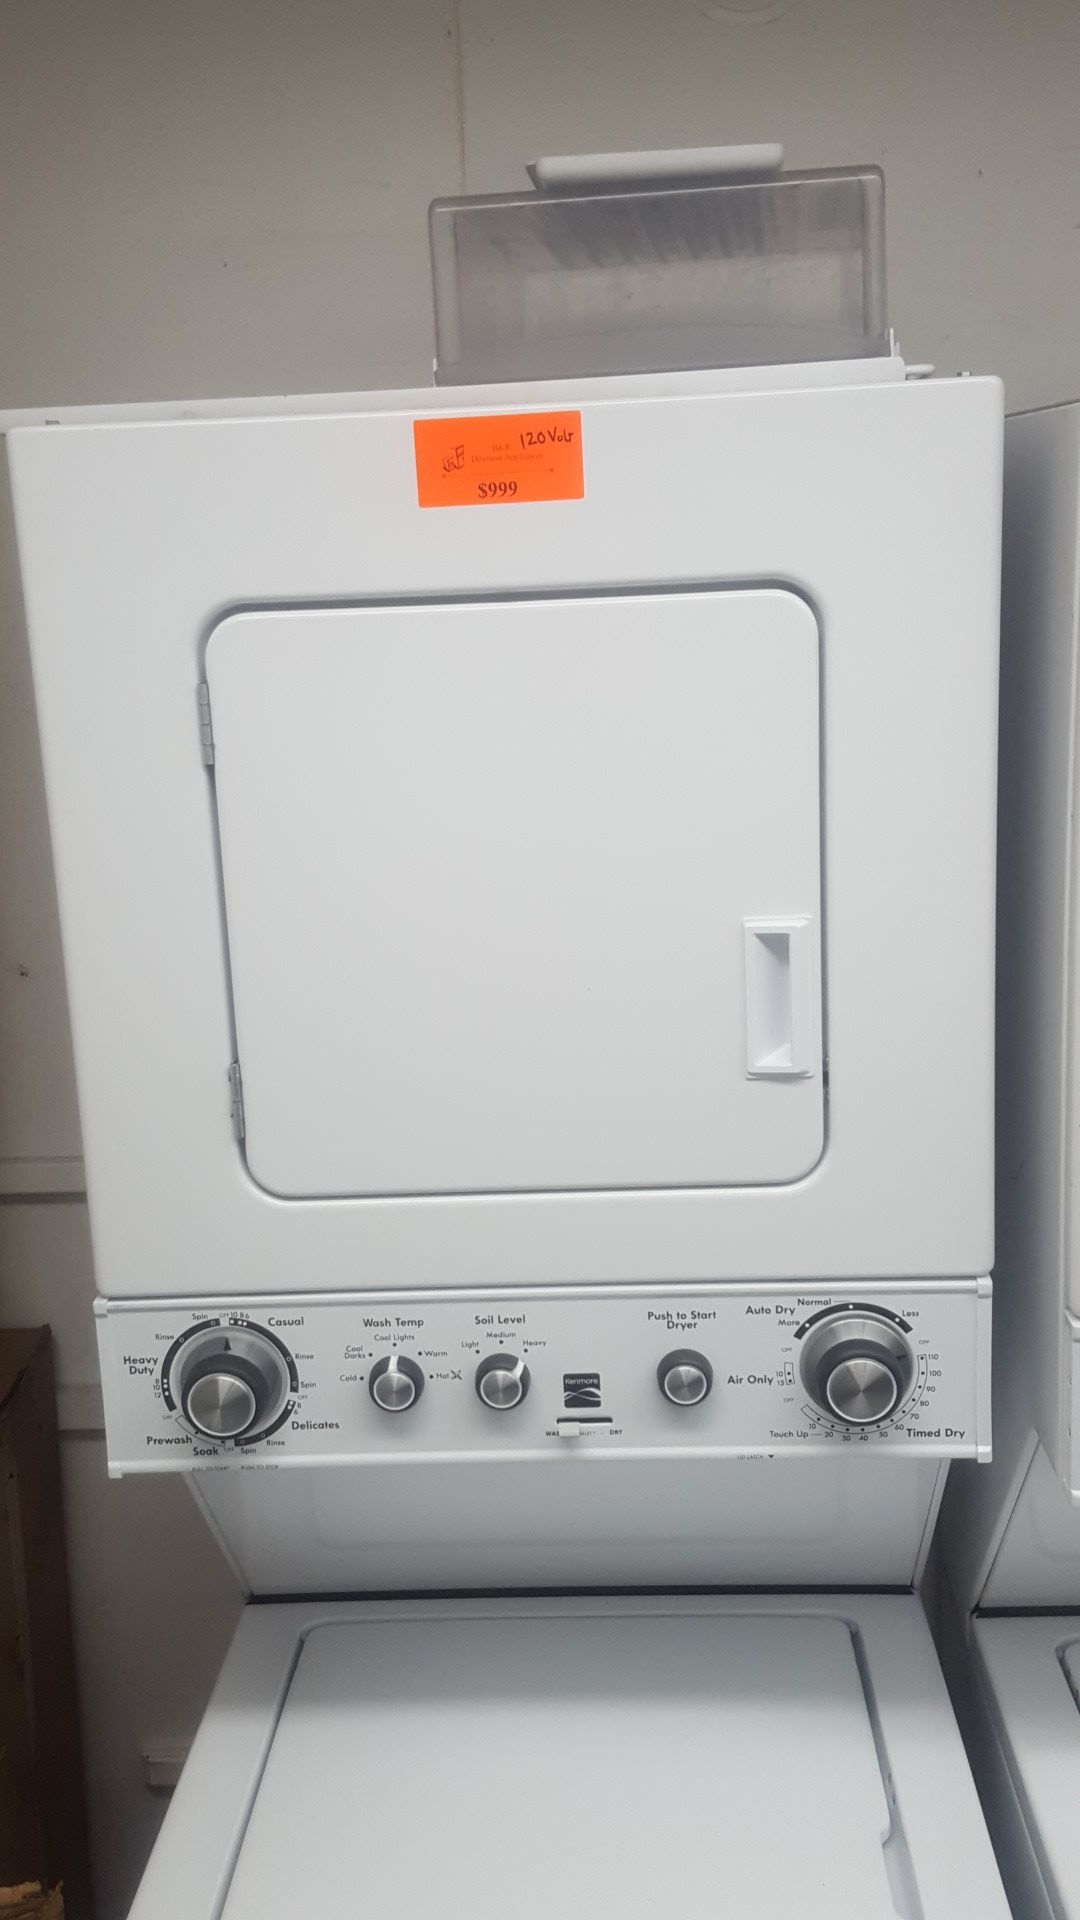 Kenmore 120 volt washer and dryer set